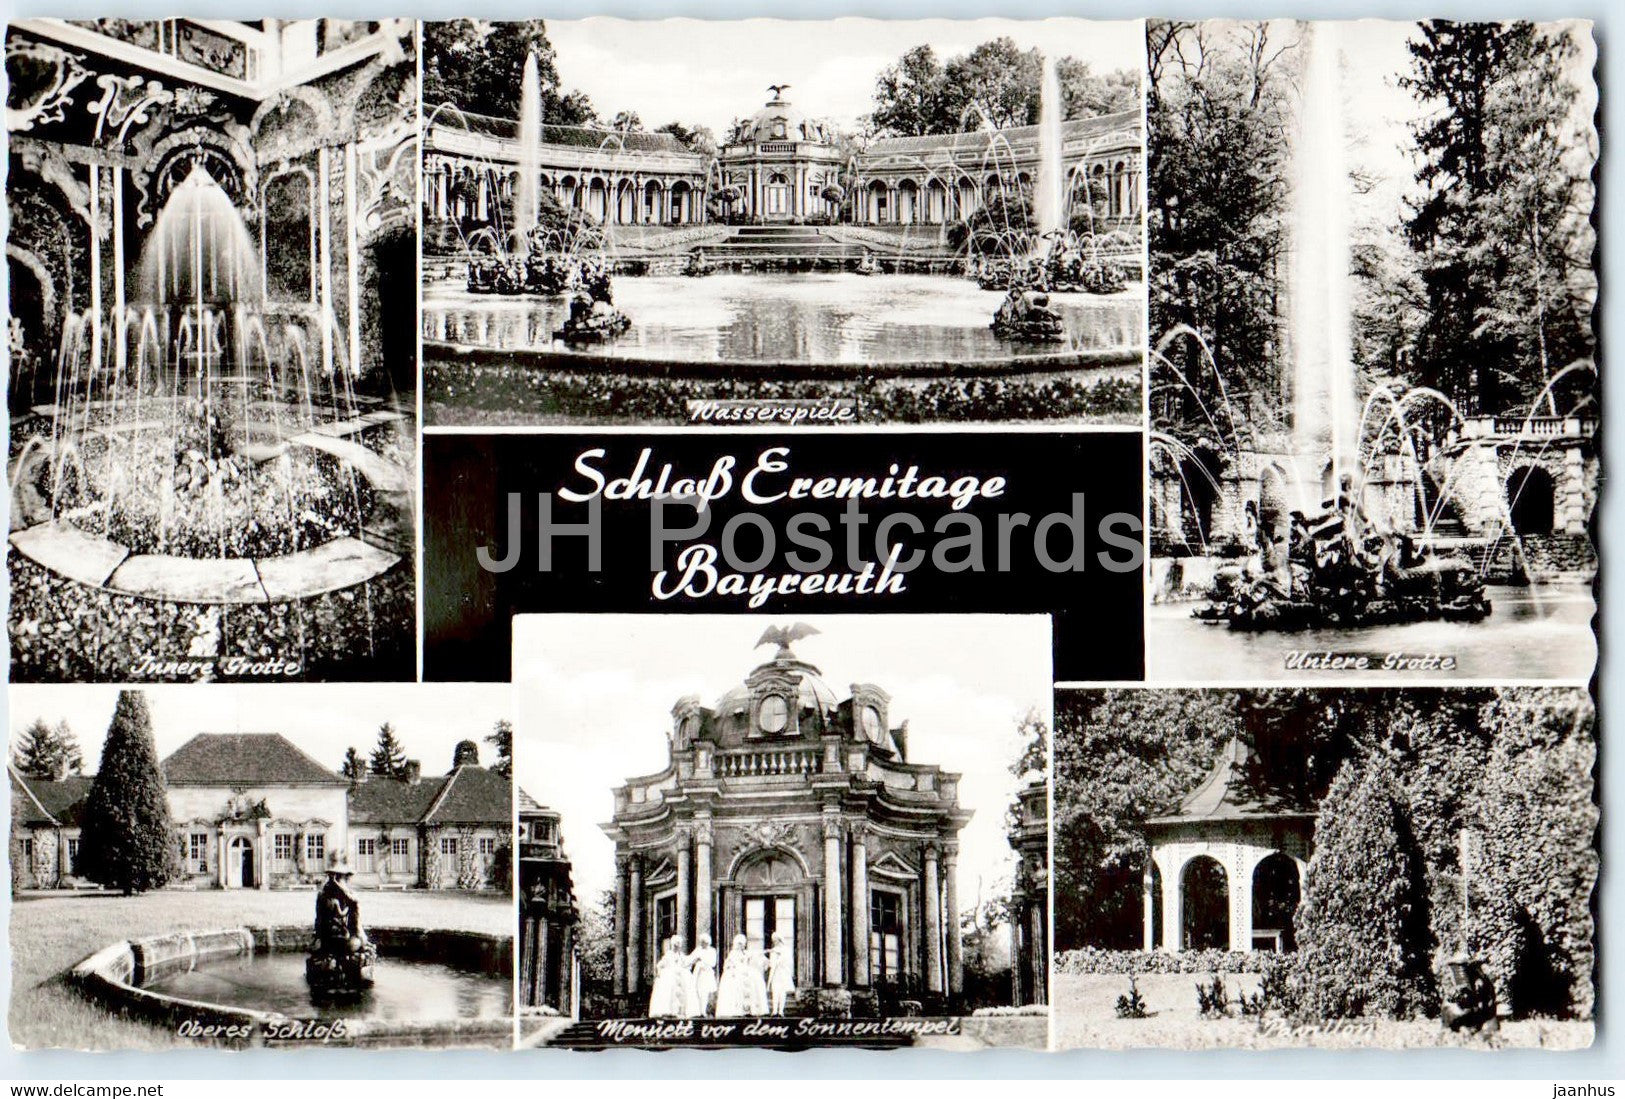 Schloss Eremitage - Bayreuth - Innere Grotte - Wasserspiele - Untere Grotte - castle - old postcard - Germany - unused - JH Postcards